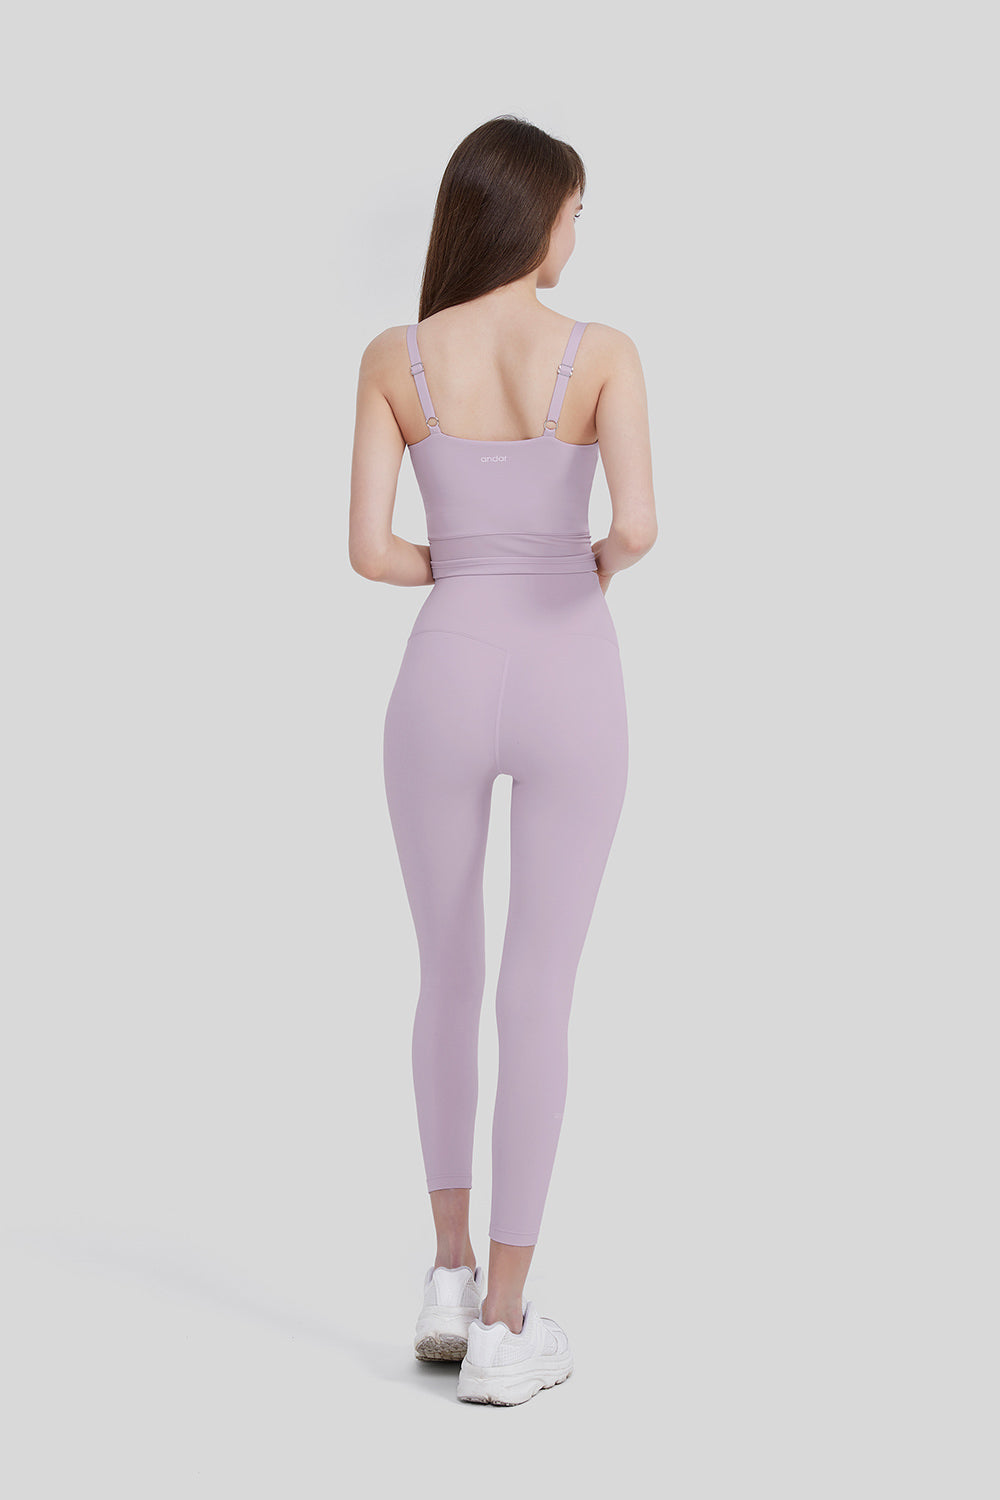 Glowmode booty illusion leggings size S, Women's Fashion, Activewear on  Carousell